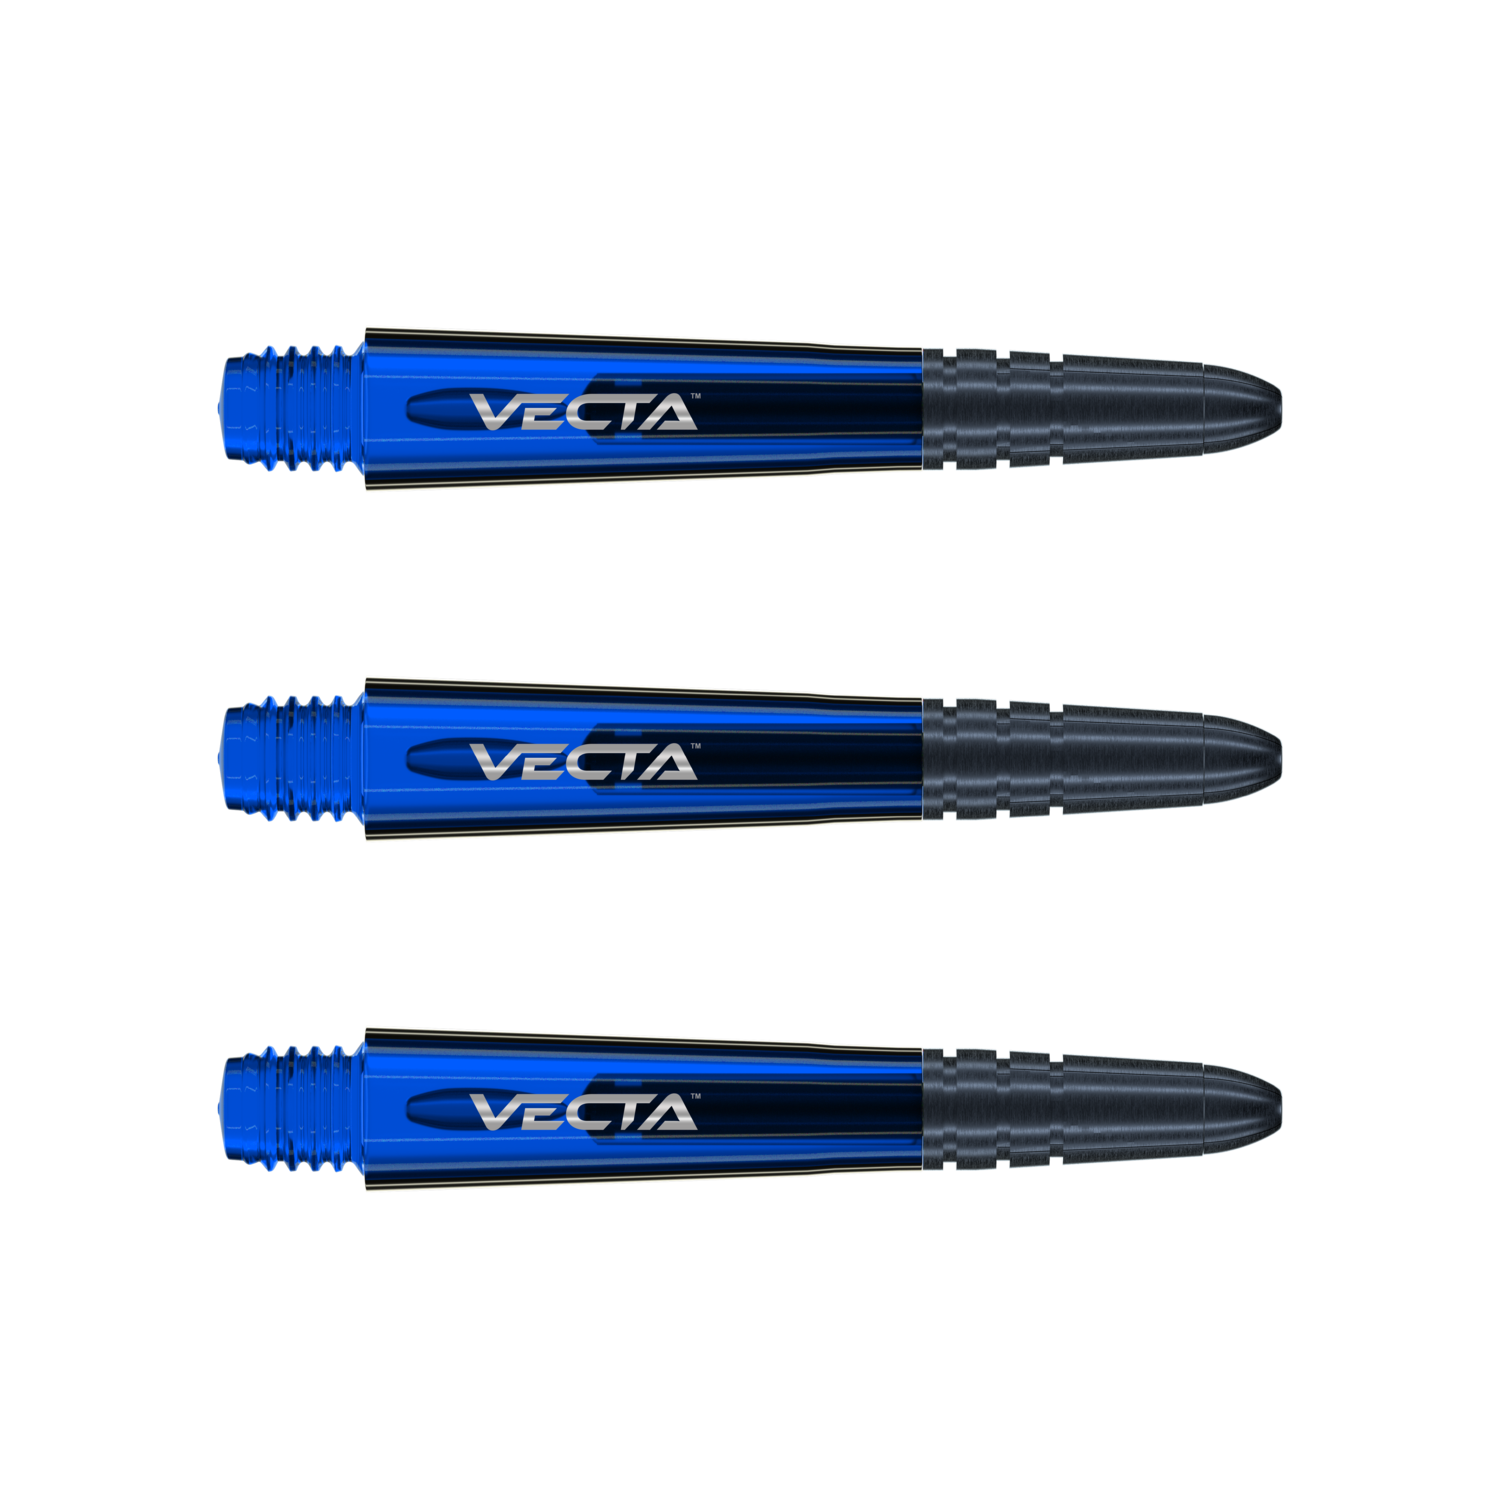 Vecta short blue shafts